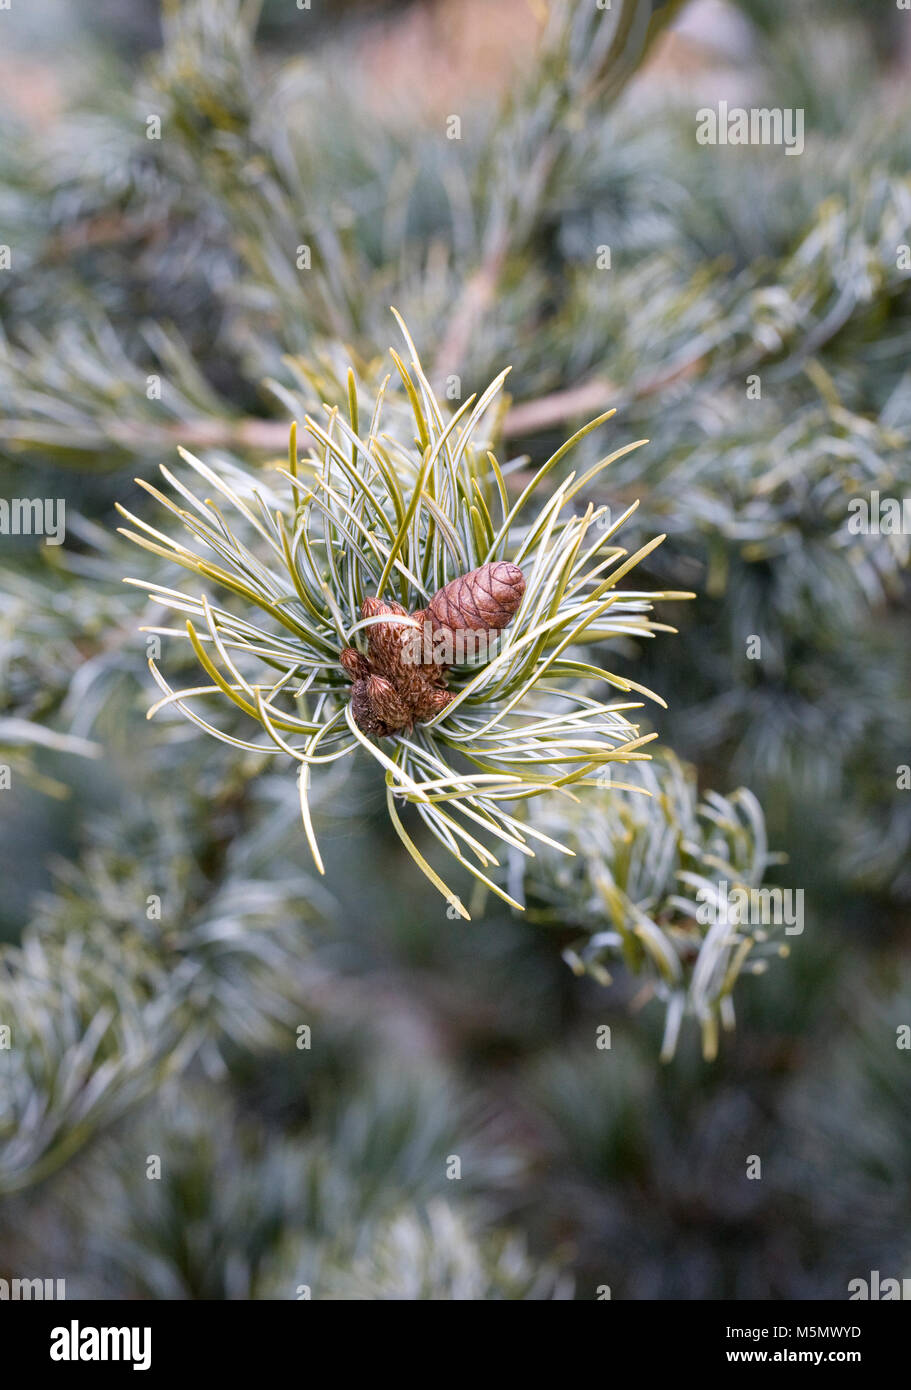 Pinus. Developing pine cones on the tree, Stock Photo